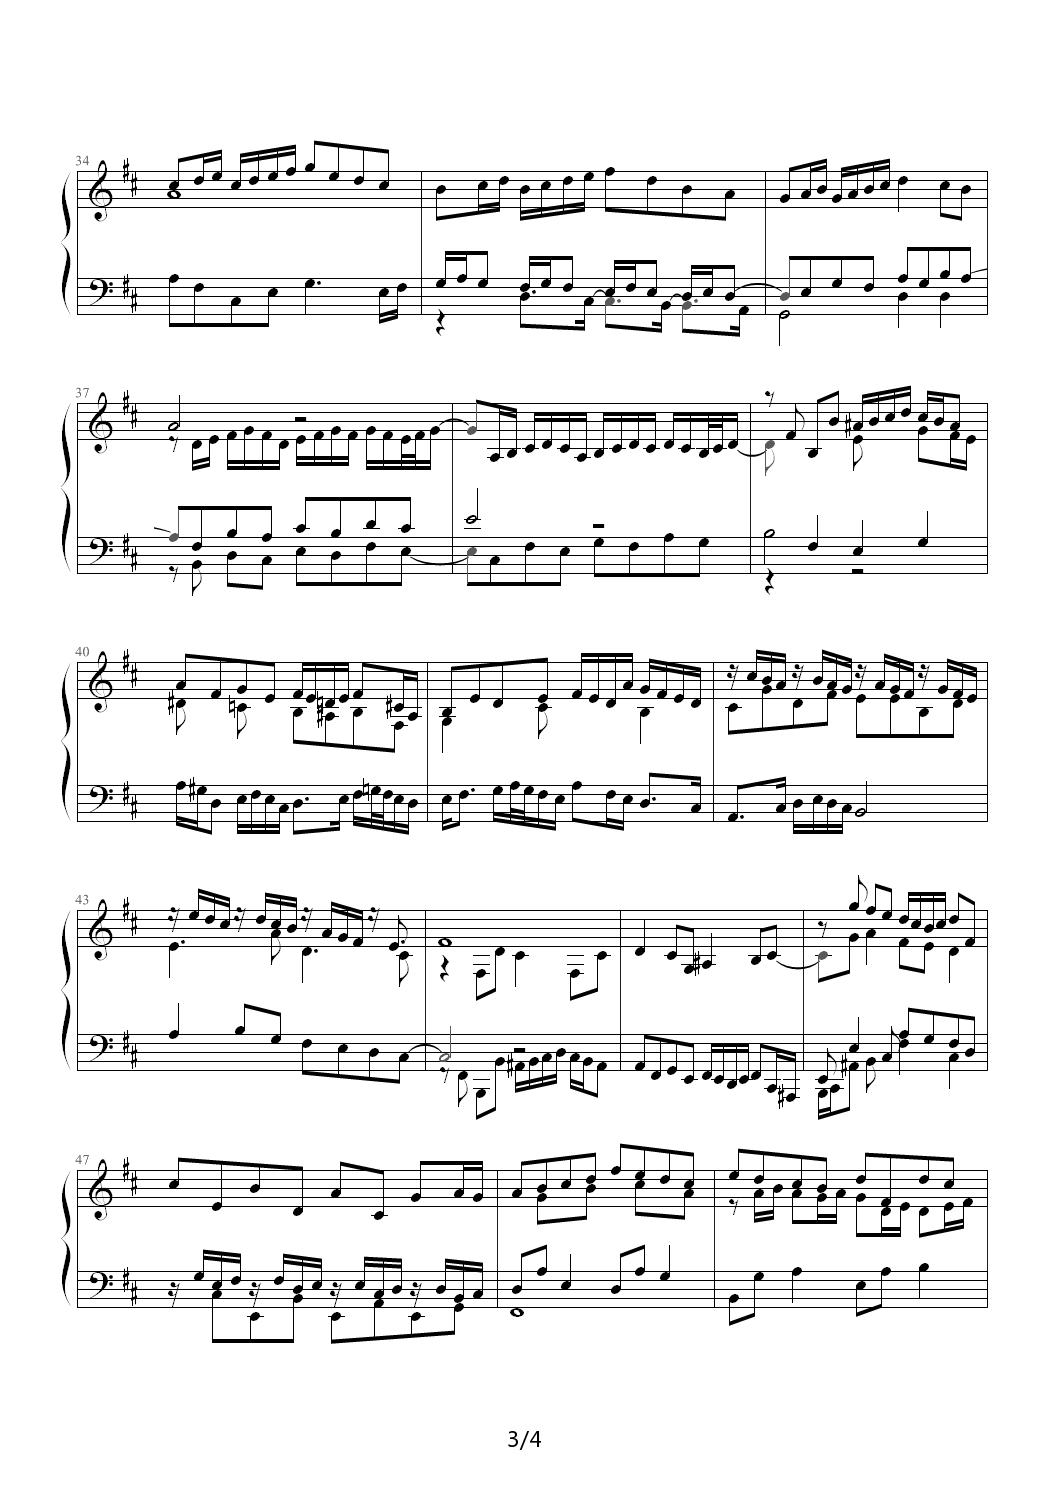 Fugue in B minor钢琴谱|Fugue in B minor最新钢琴谱|Fugue in B minor钢琴谱下载